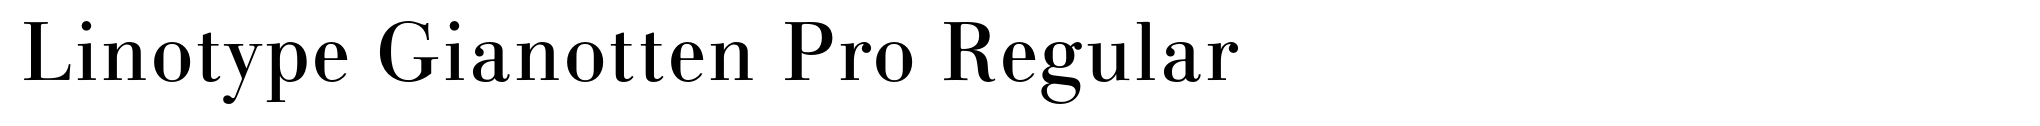 Linotype Gianotten Pro Regular image